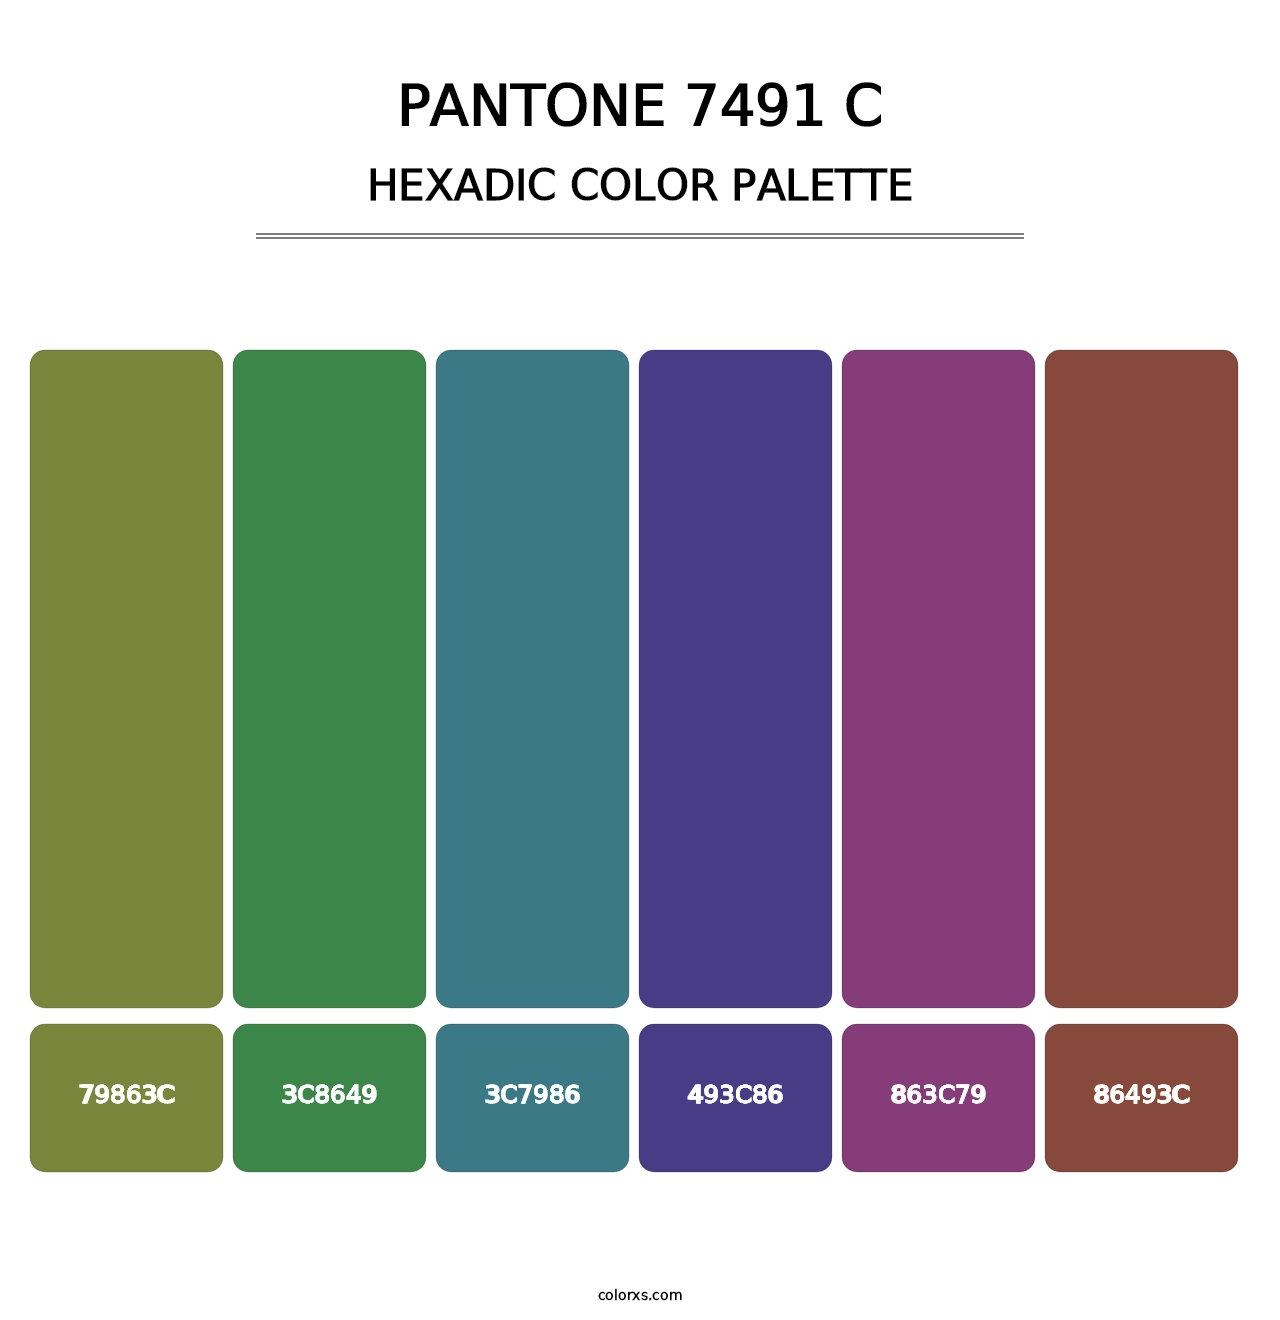 PANTONE 7491 C - Hexadic Color Palette